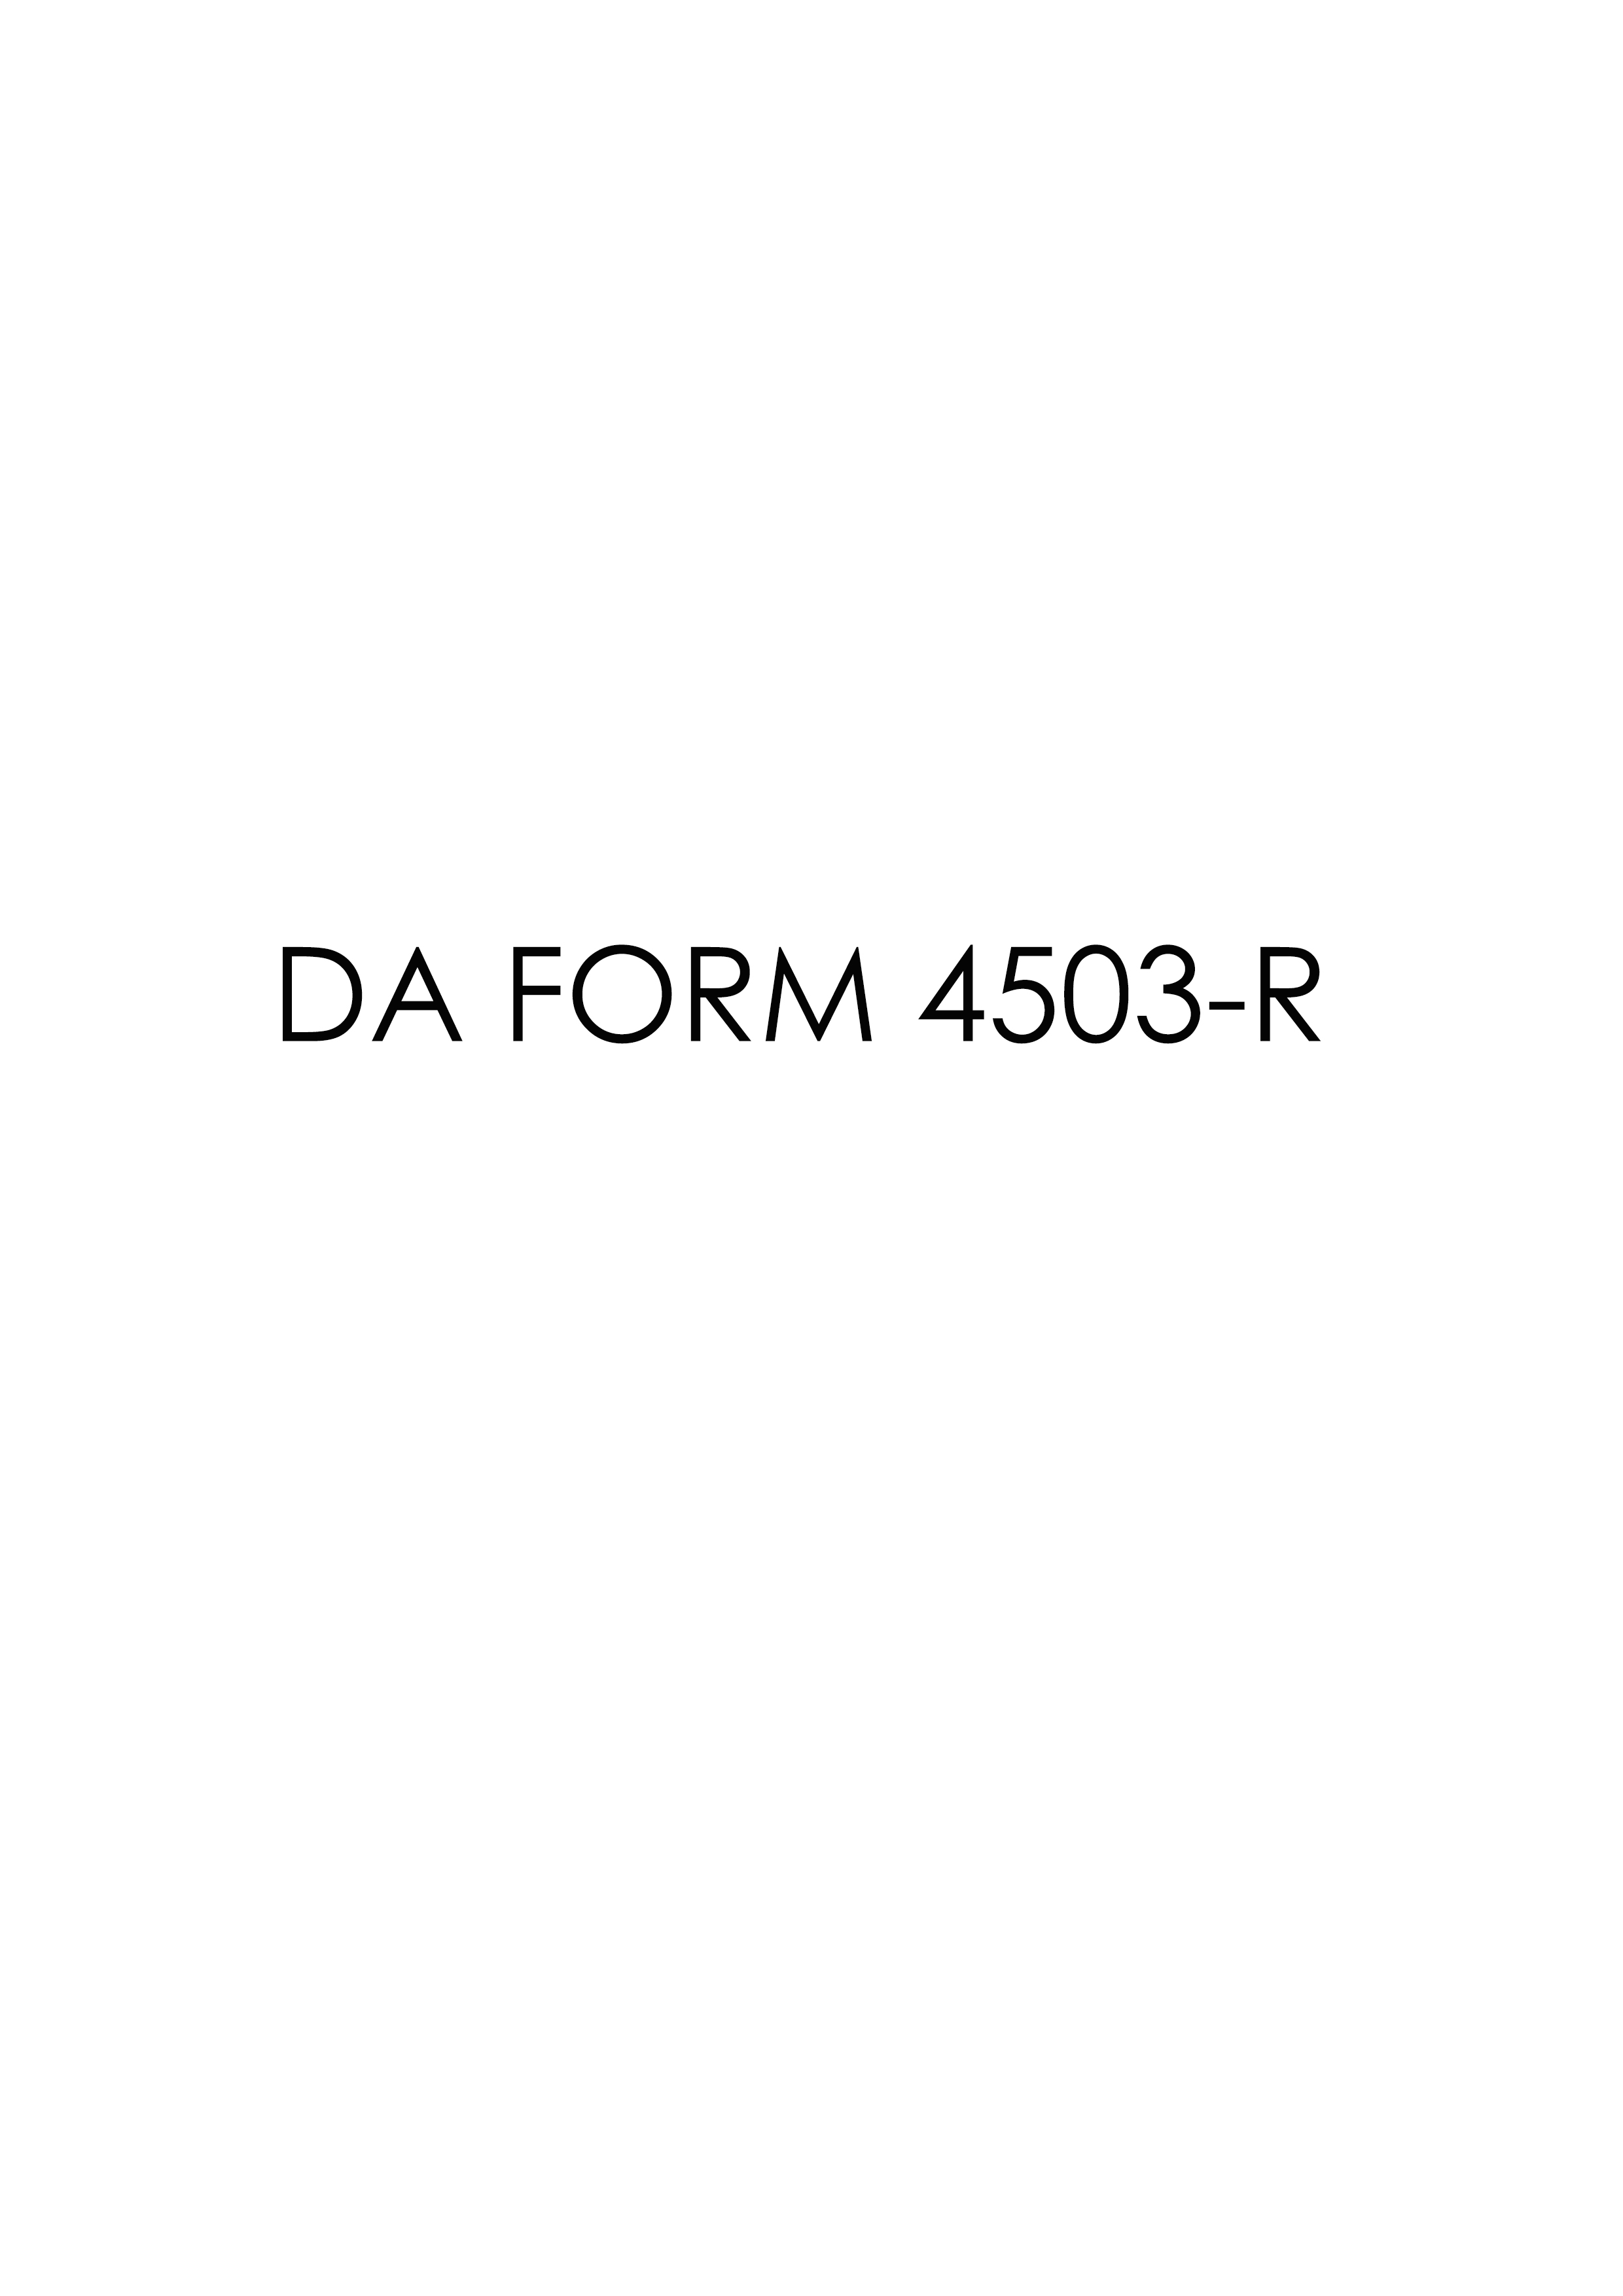 da Form 4503-R fillable